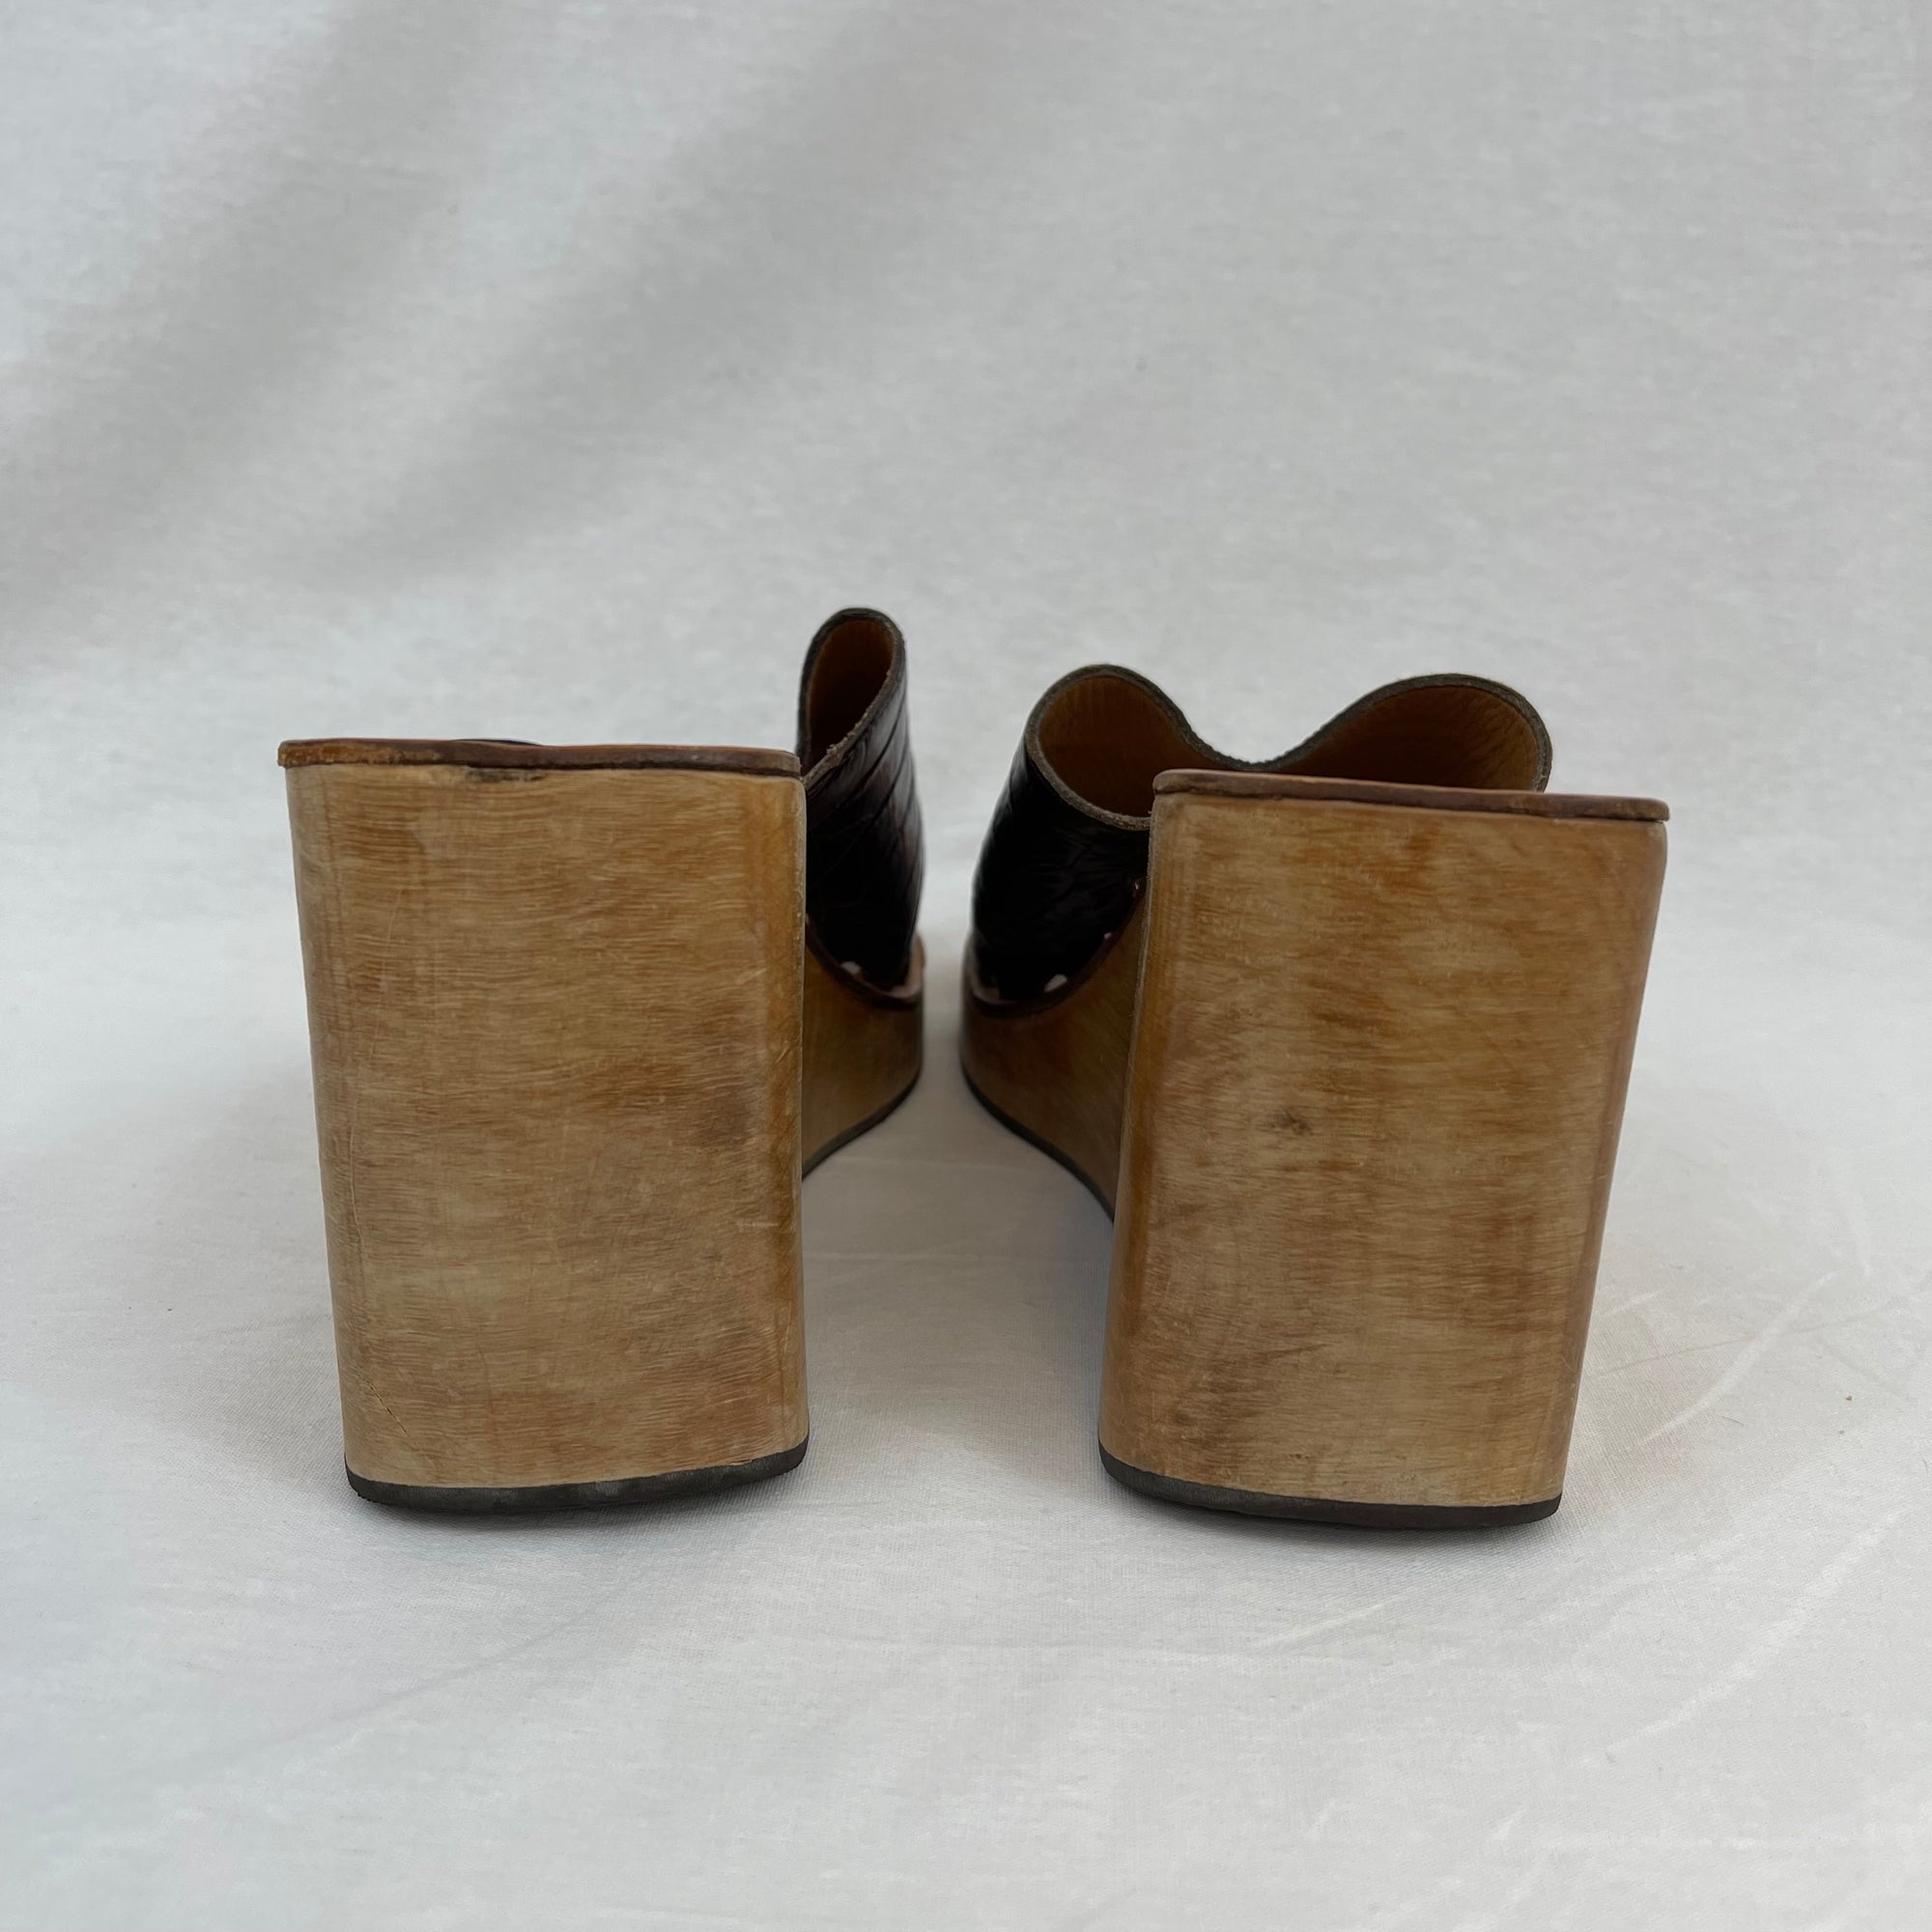 Vintage Ralph Lauren Wooden Platform Sandals size 8